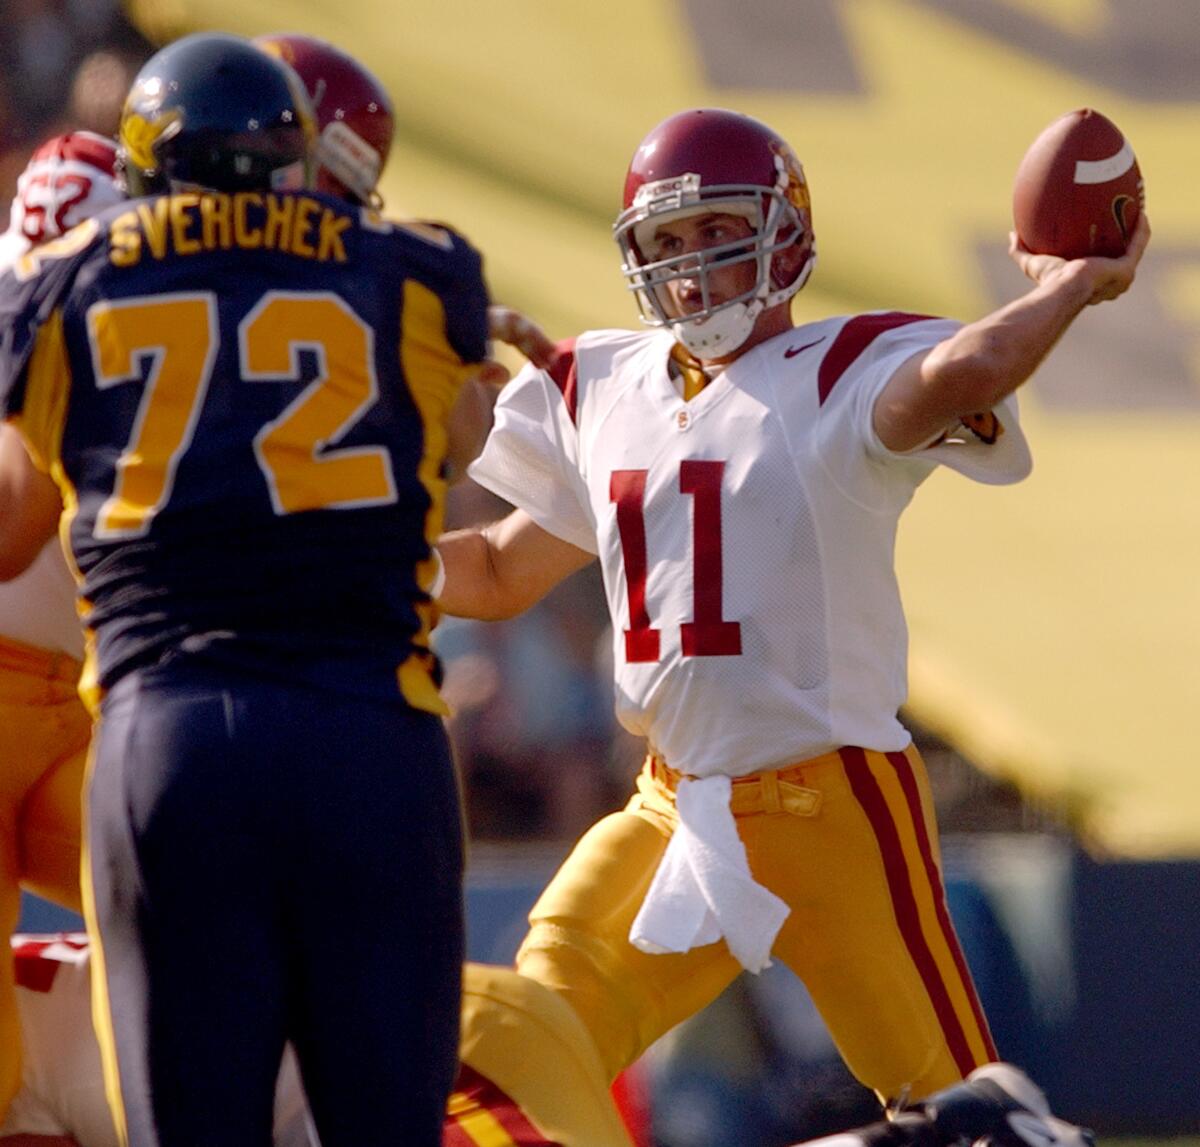 USC quarterback Matt Leinart throws a pass in a triple overtime loss to California on Sept. 27, 2003.